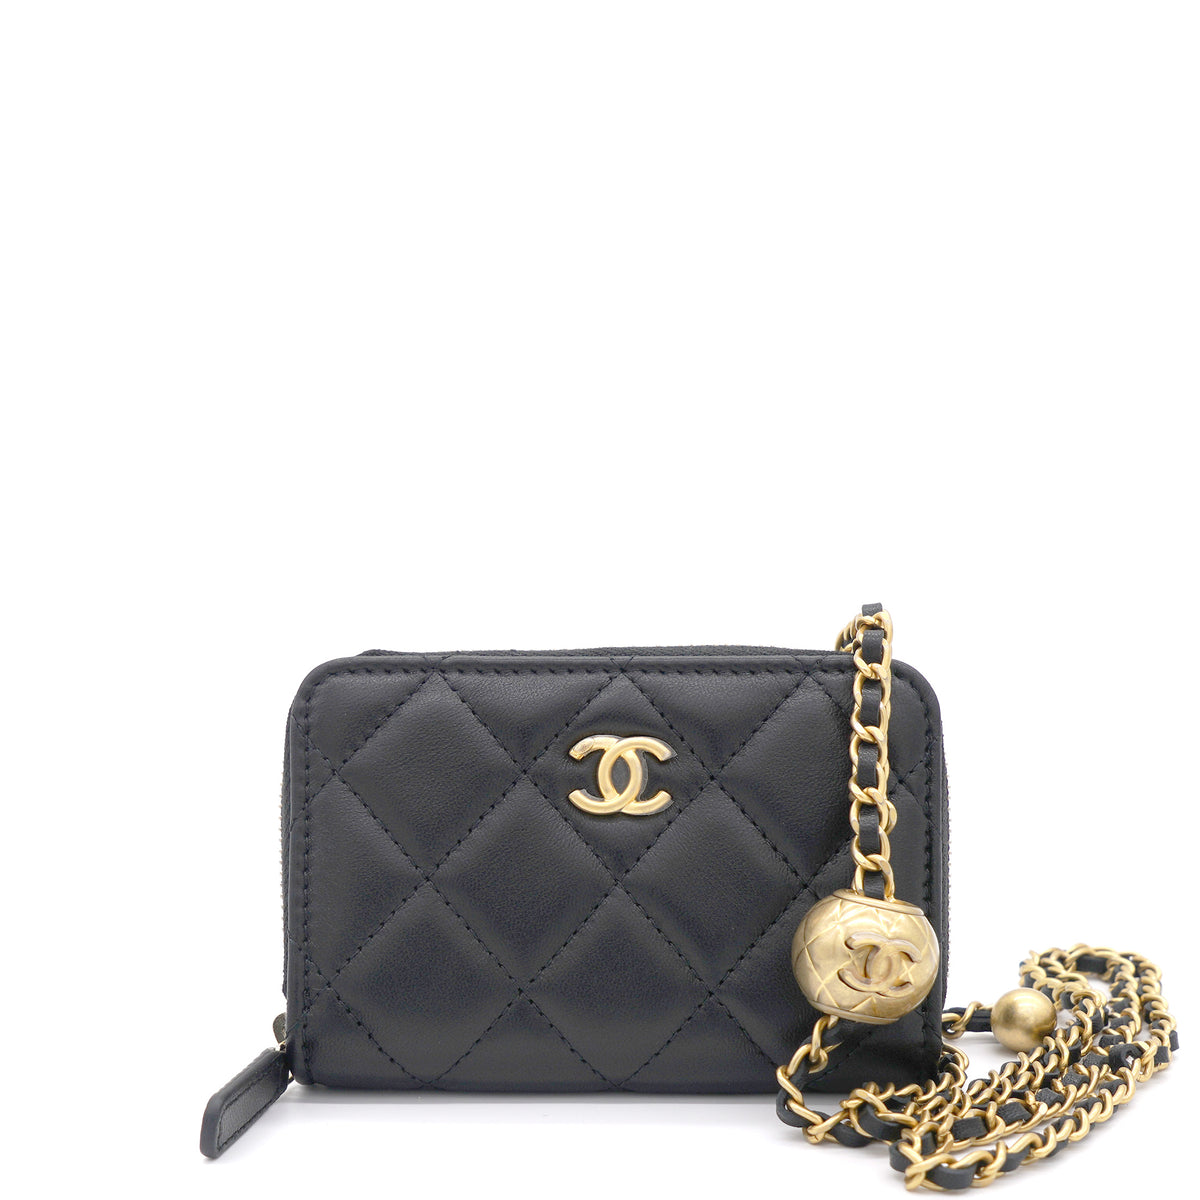 CHANEL, Bags, Chanel Cc Coin Bag